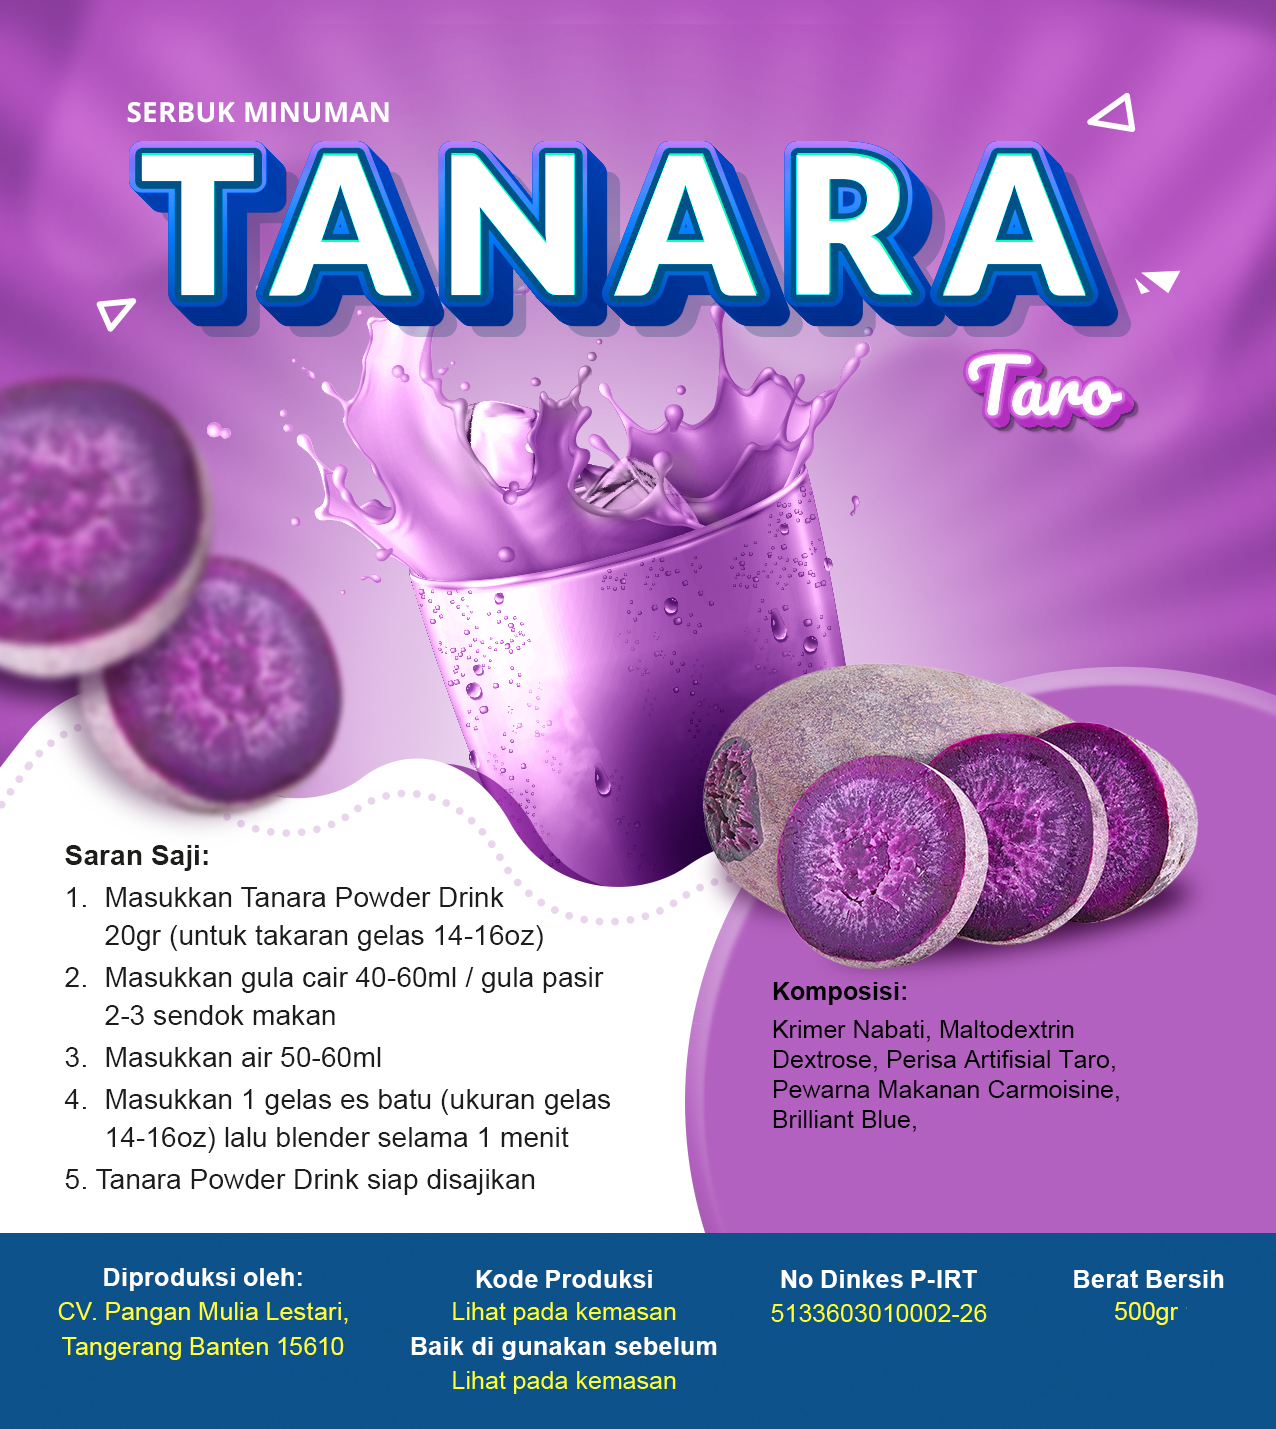 Serbuk Minuman Tanara Rasa Taro - Bandar Powder